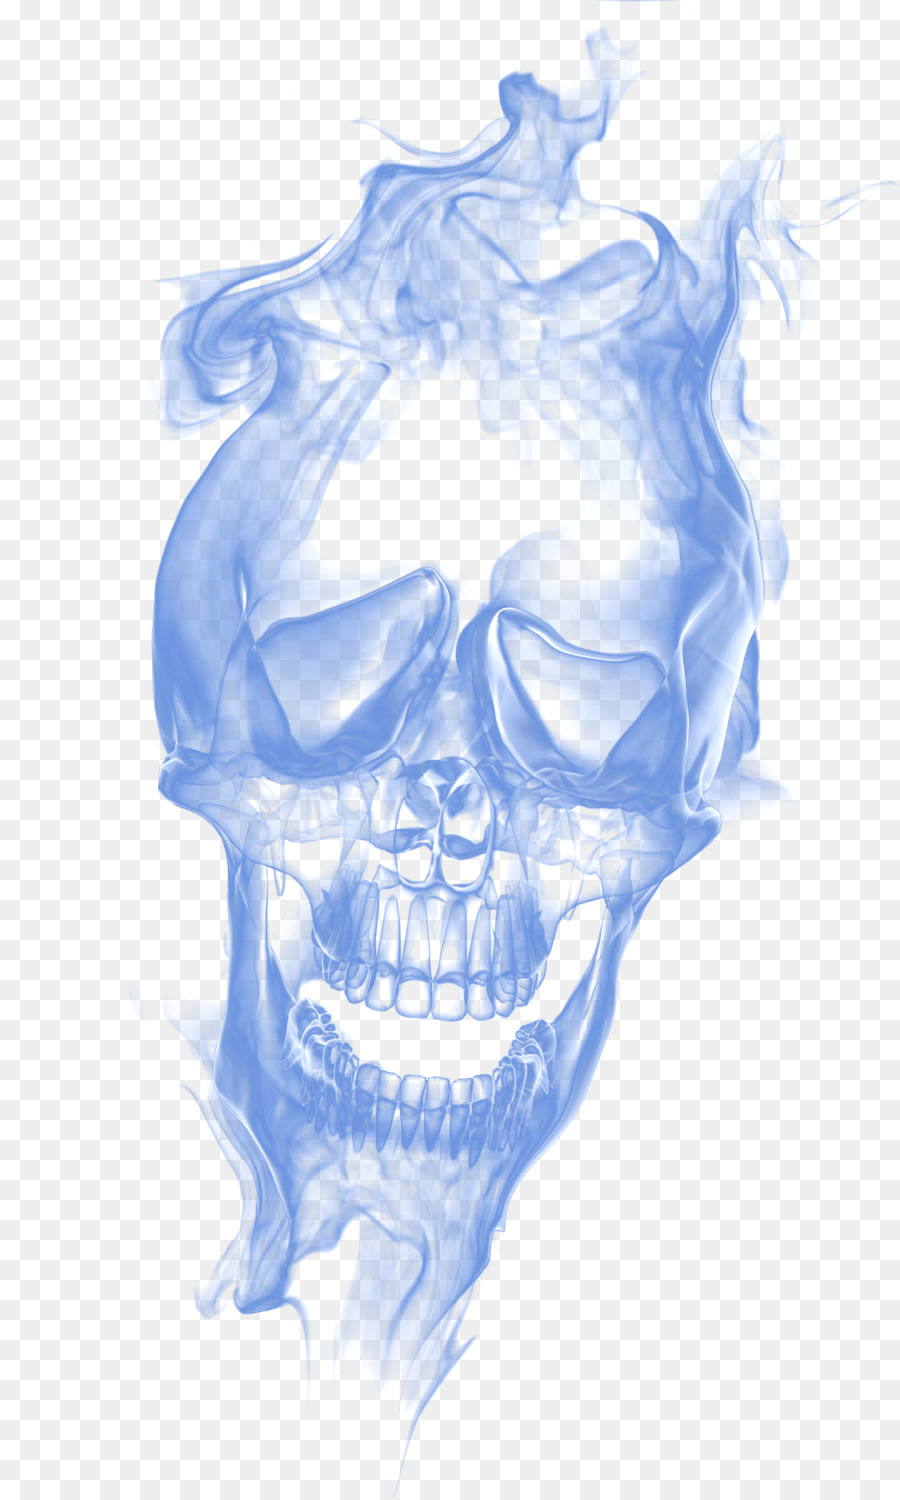 Clip art Smoking Skull Image Portable Network Graphics - skull drawing png transparent png download - 2930*4873 - Free Transparent Smoking png Download.